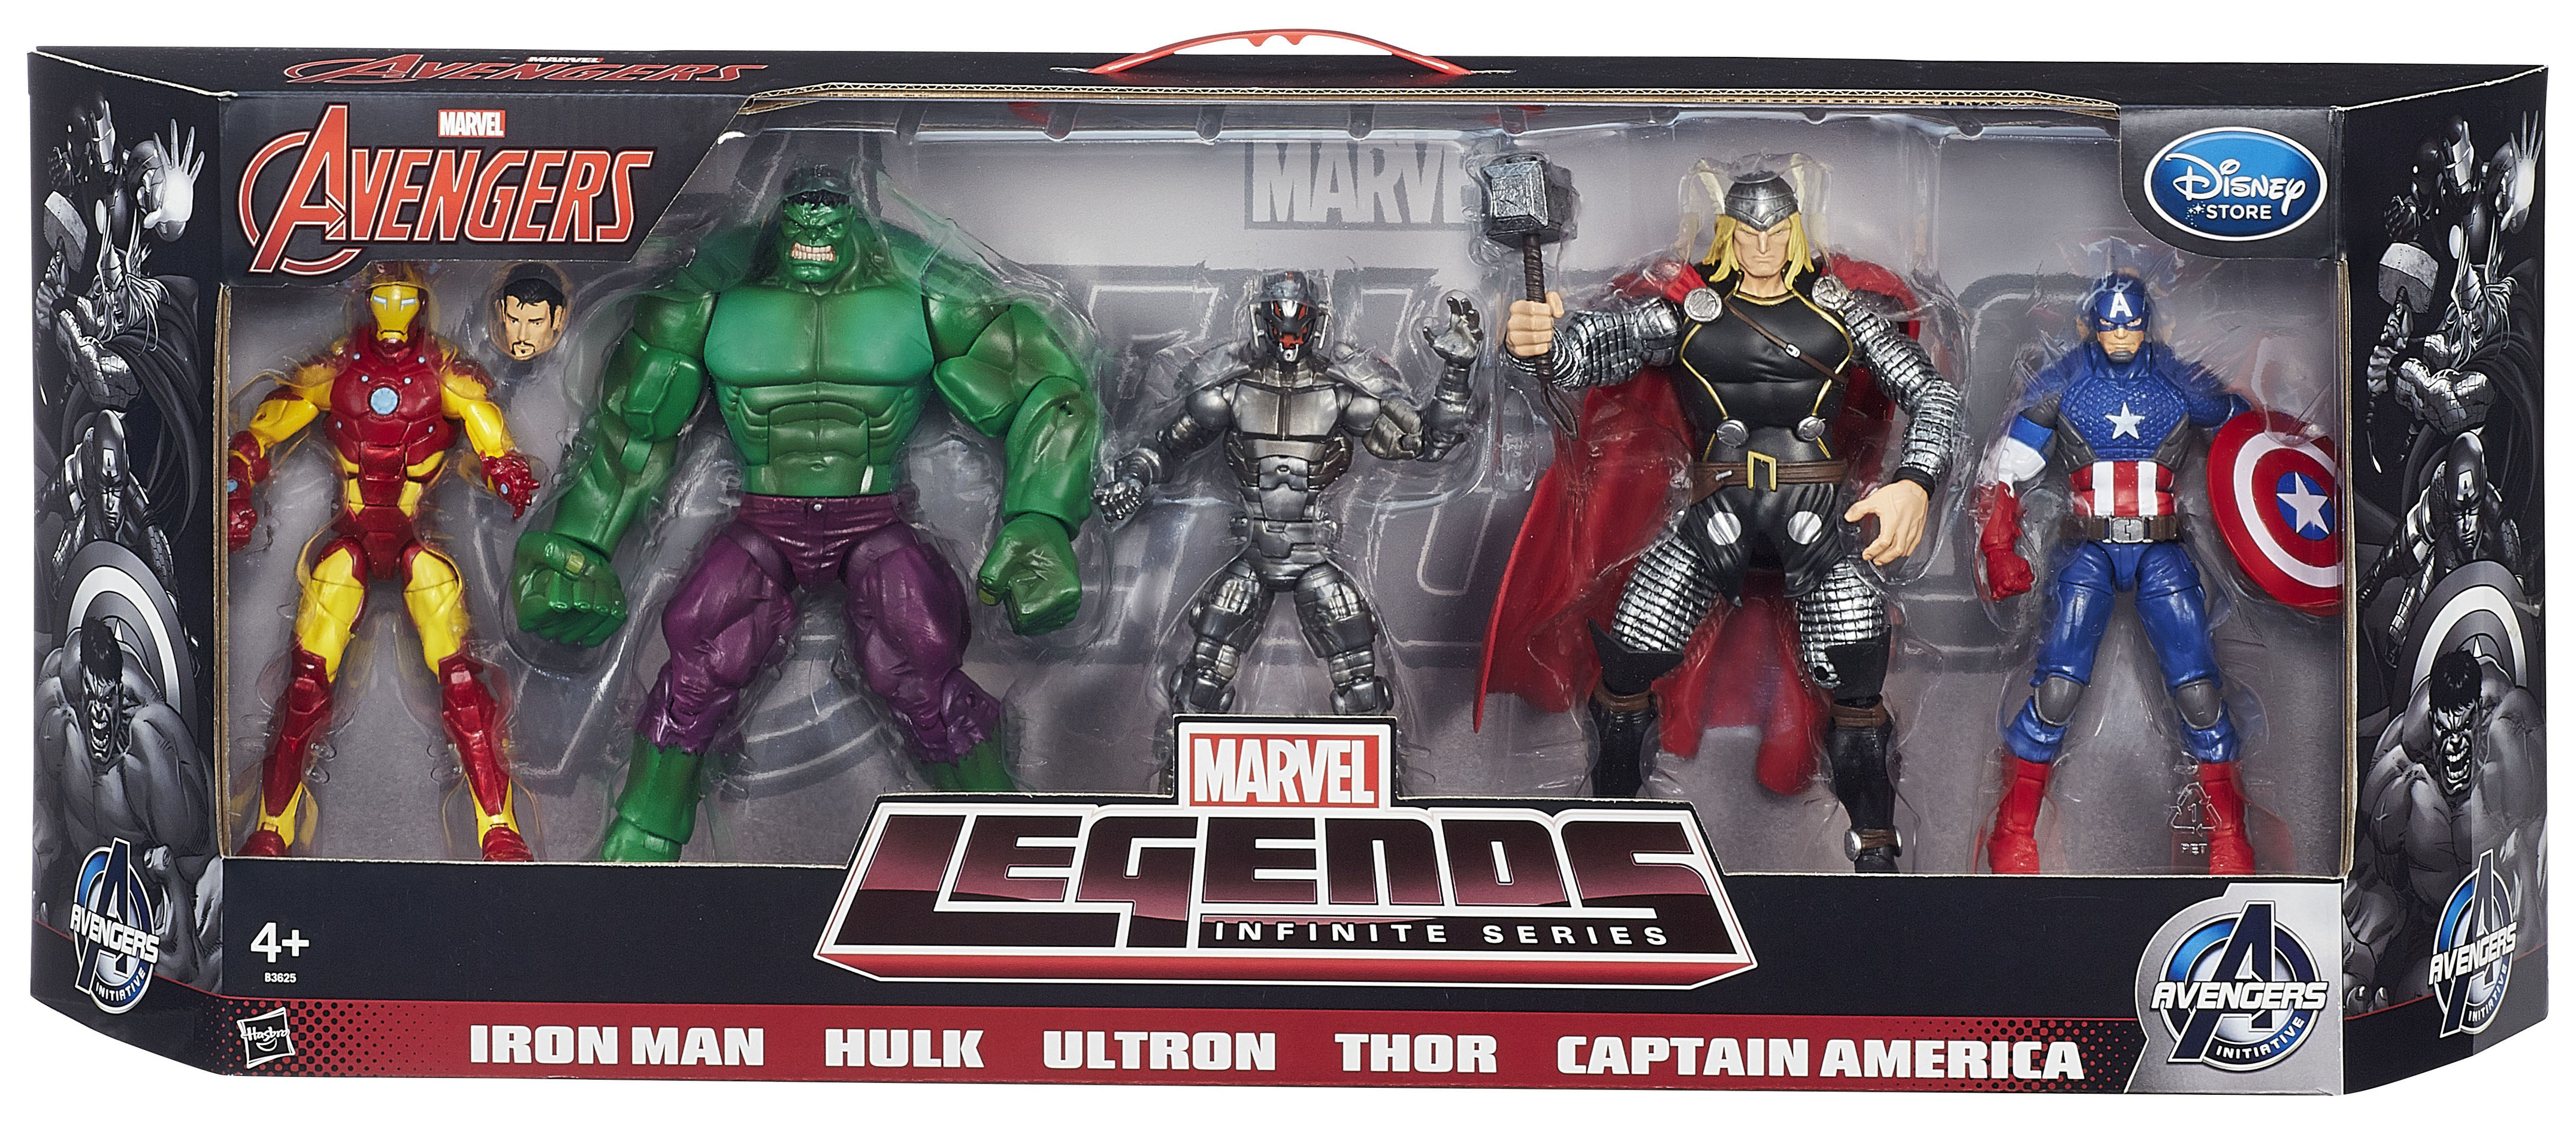 Marvel Legends Disney Store 5 Pack Exclusive Hasbro Avengers Figures Hulk Ultron 